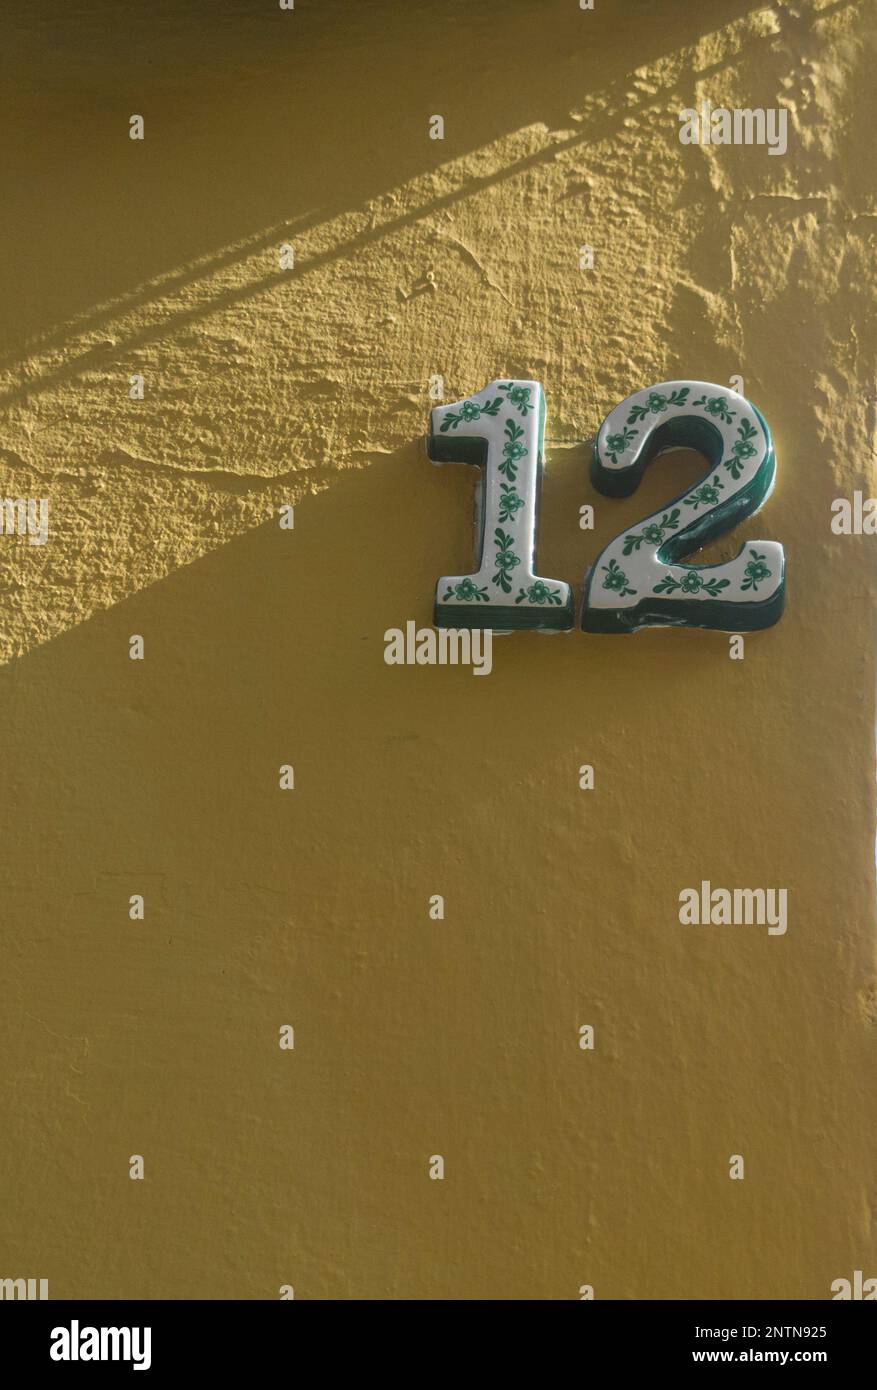 Casa número 12 signo fotografías e imágenes de alta resolución - Alamy